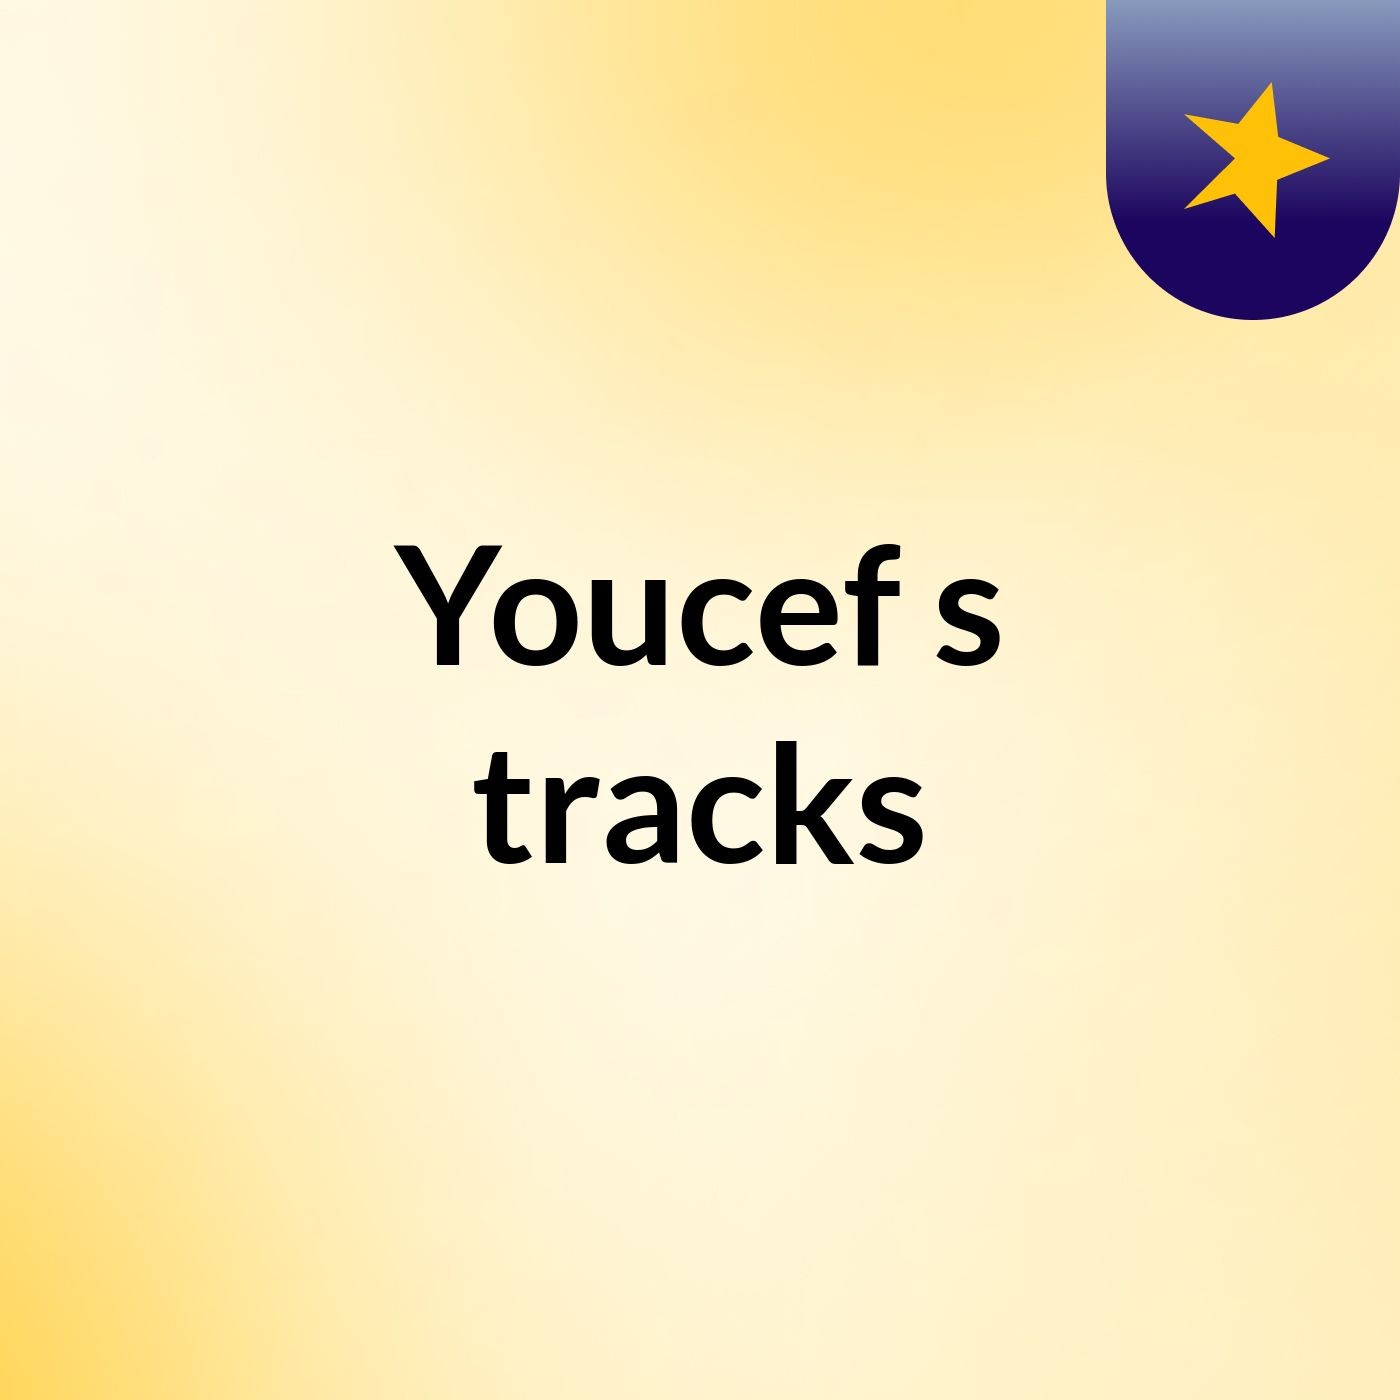 Youcef's tracks